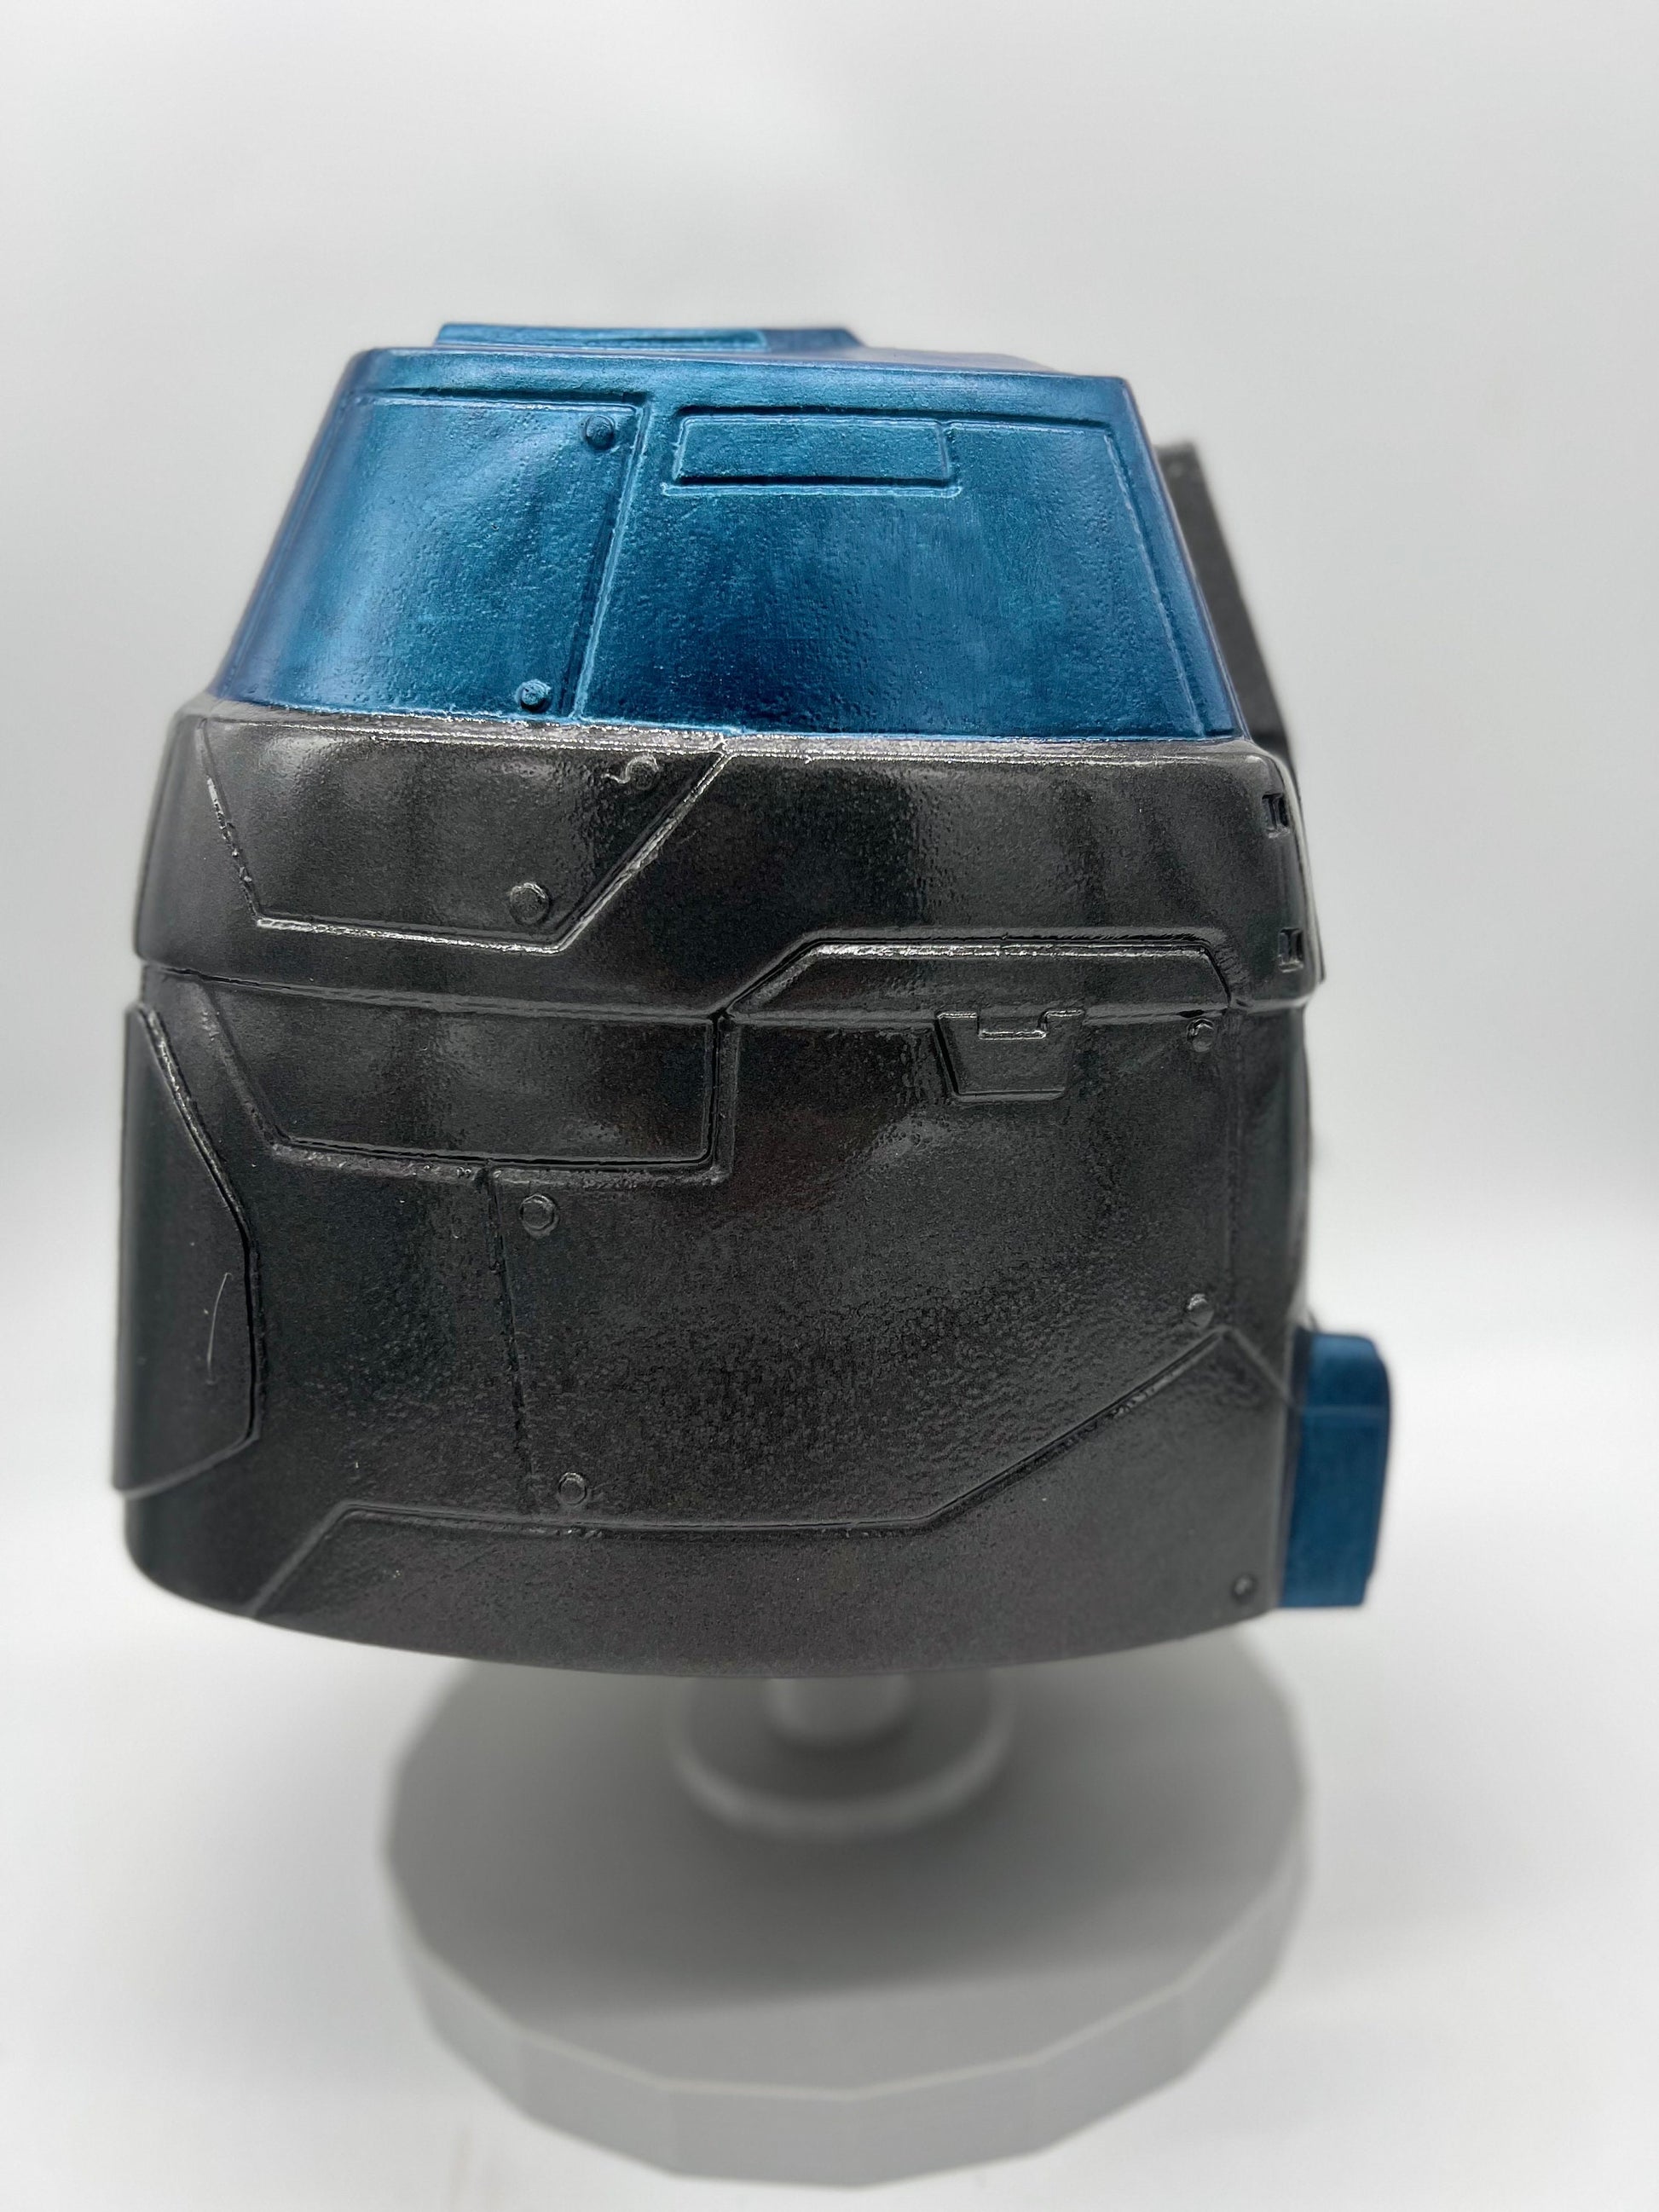 Megatron Beast Wars Wearable Cosplay Helmet